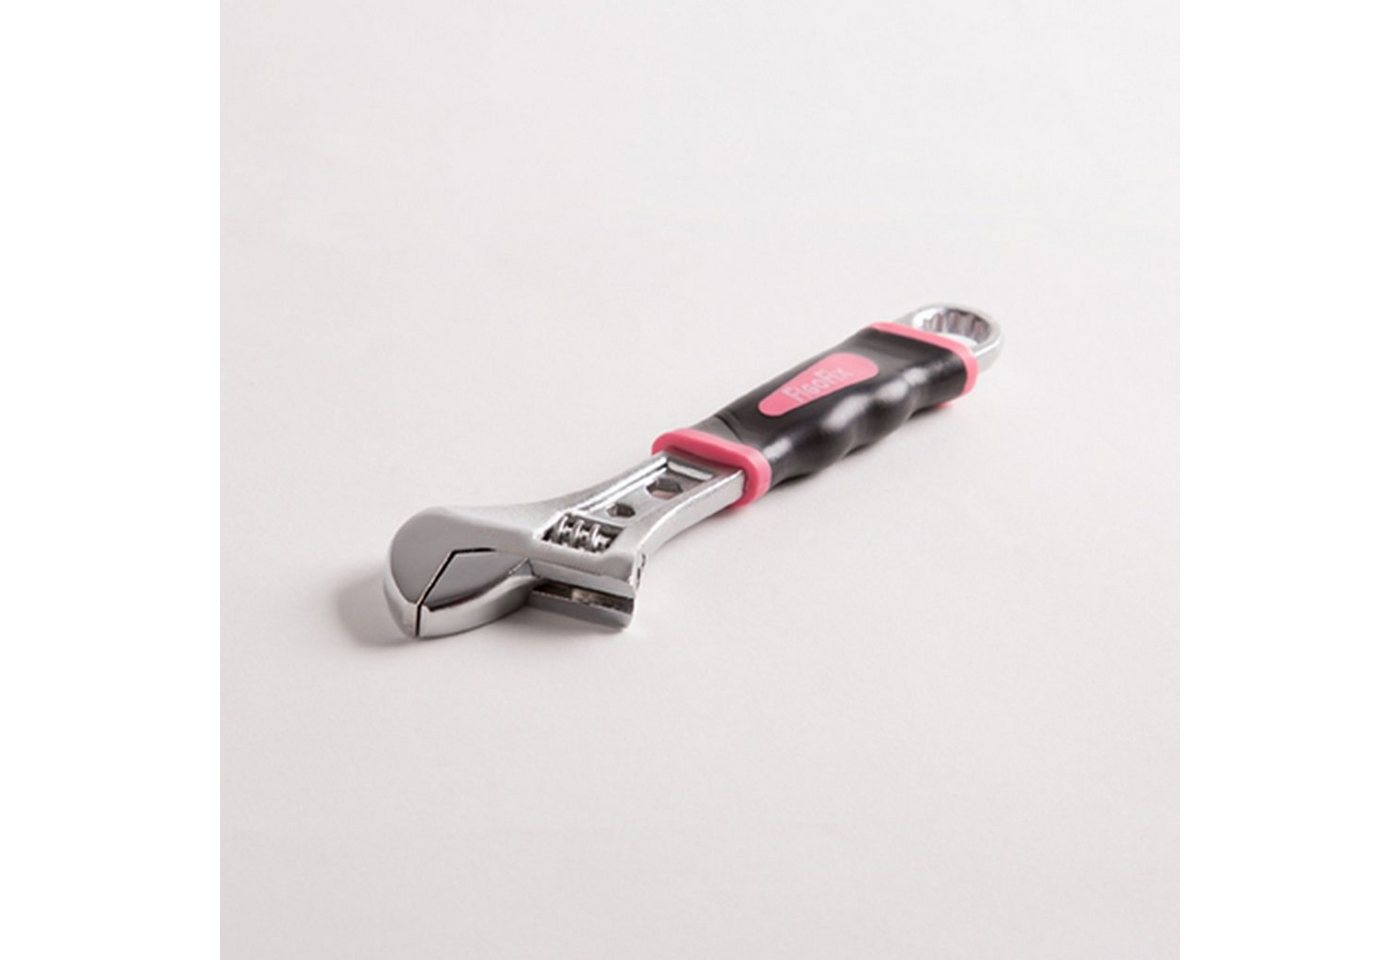 qpool24 Gabelschlüssel, Figofix rosa Gabelschlüssel von qpool24